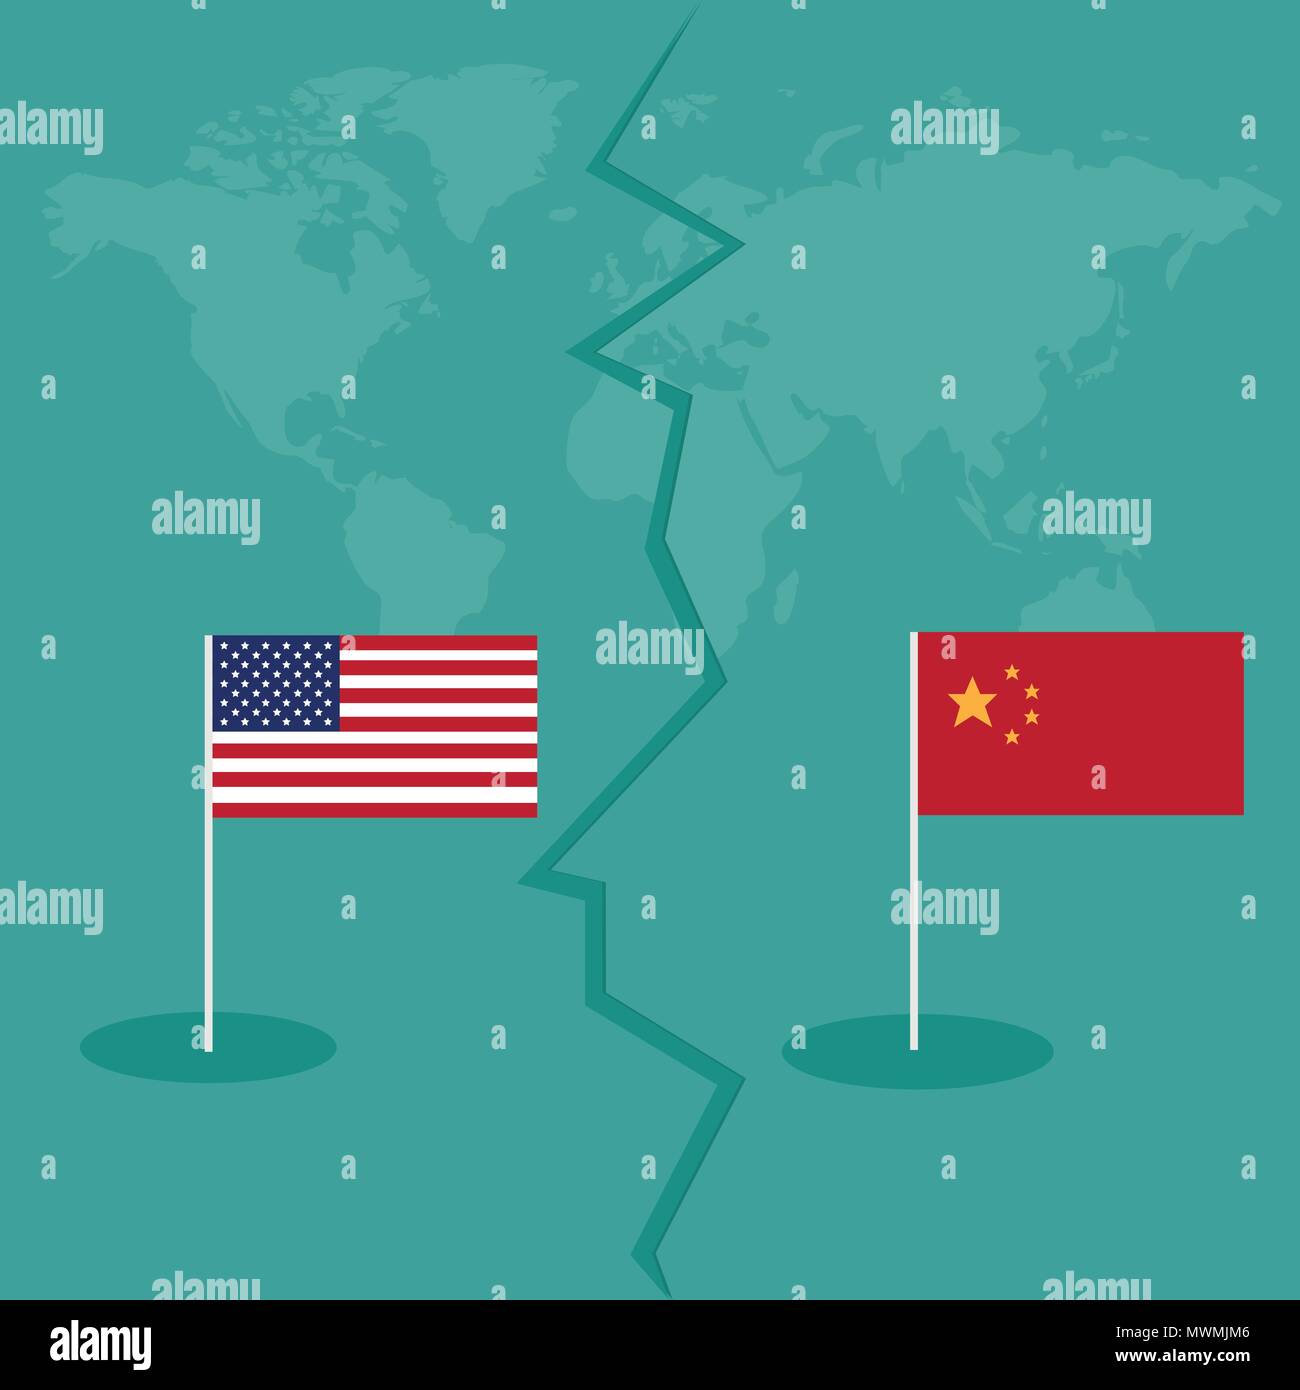 trade war America China tariff business global exchange international Stock Vector